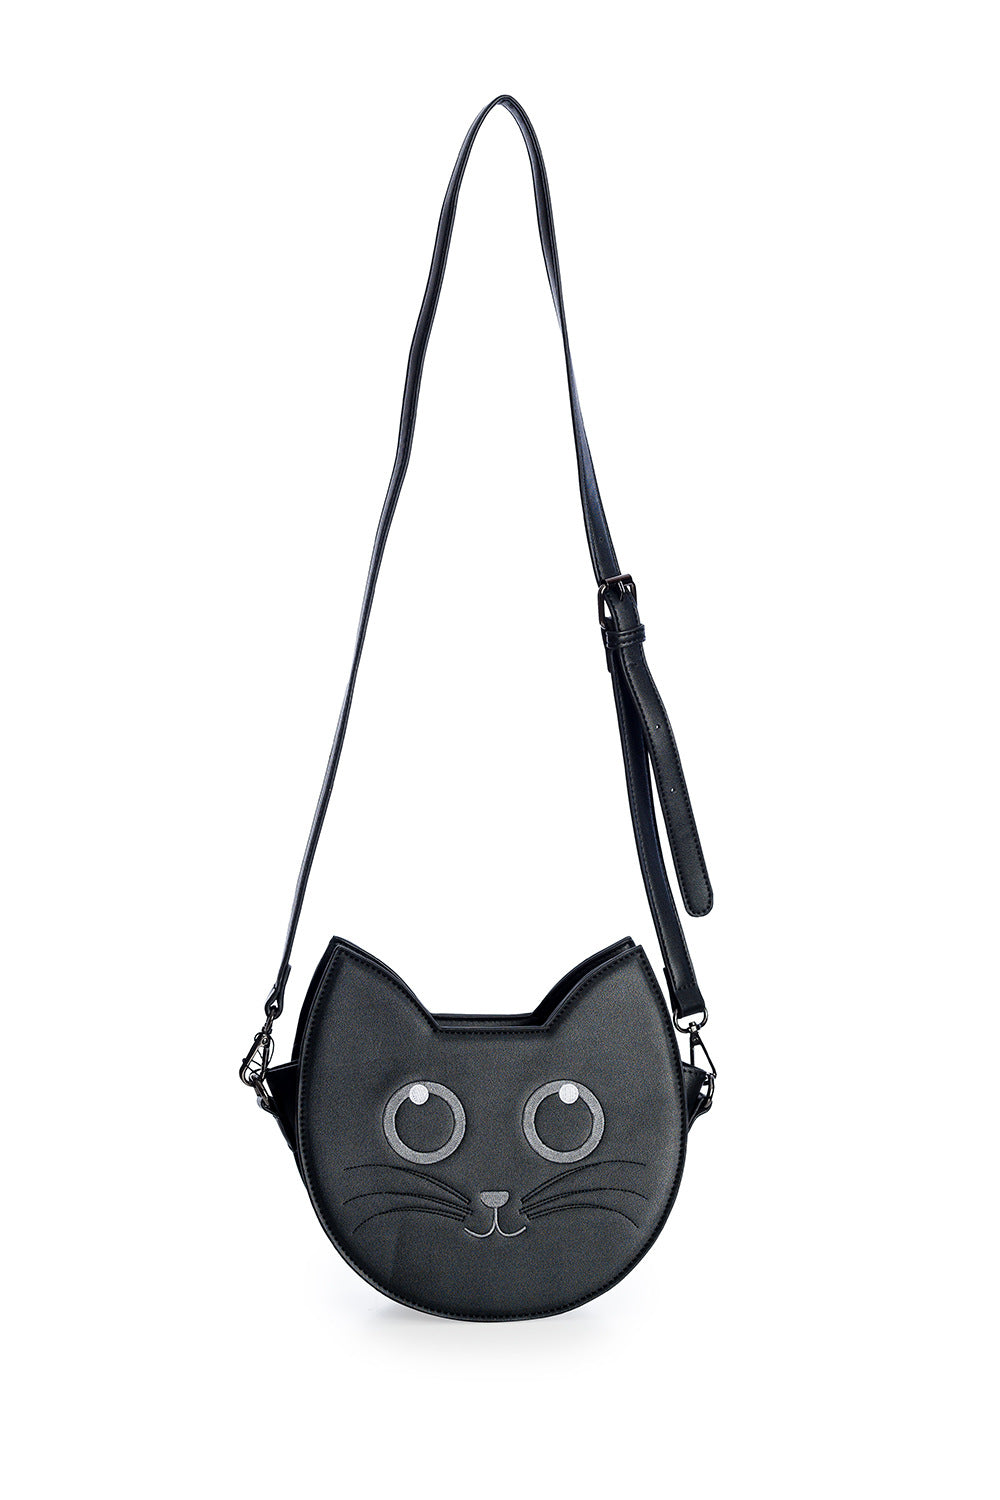 Lost Queen Women's Wendigo Shoulder Bag Cute Black Cat Bat Crossbody Purse:  Handbags: Amazon.com